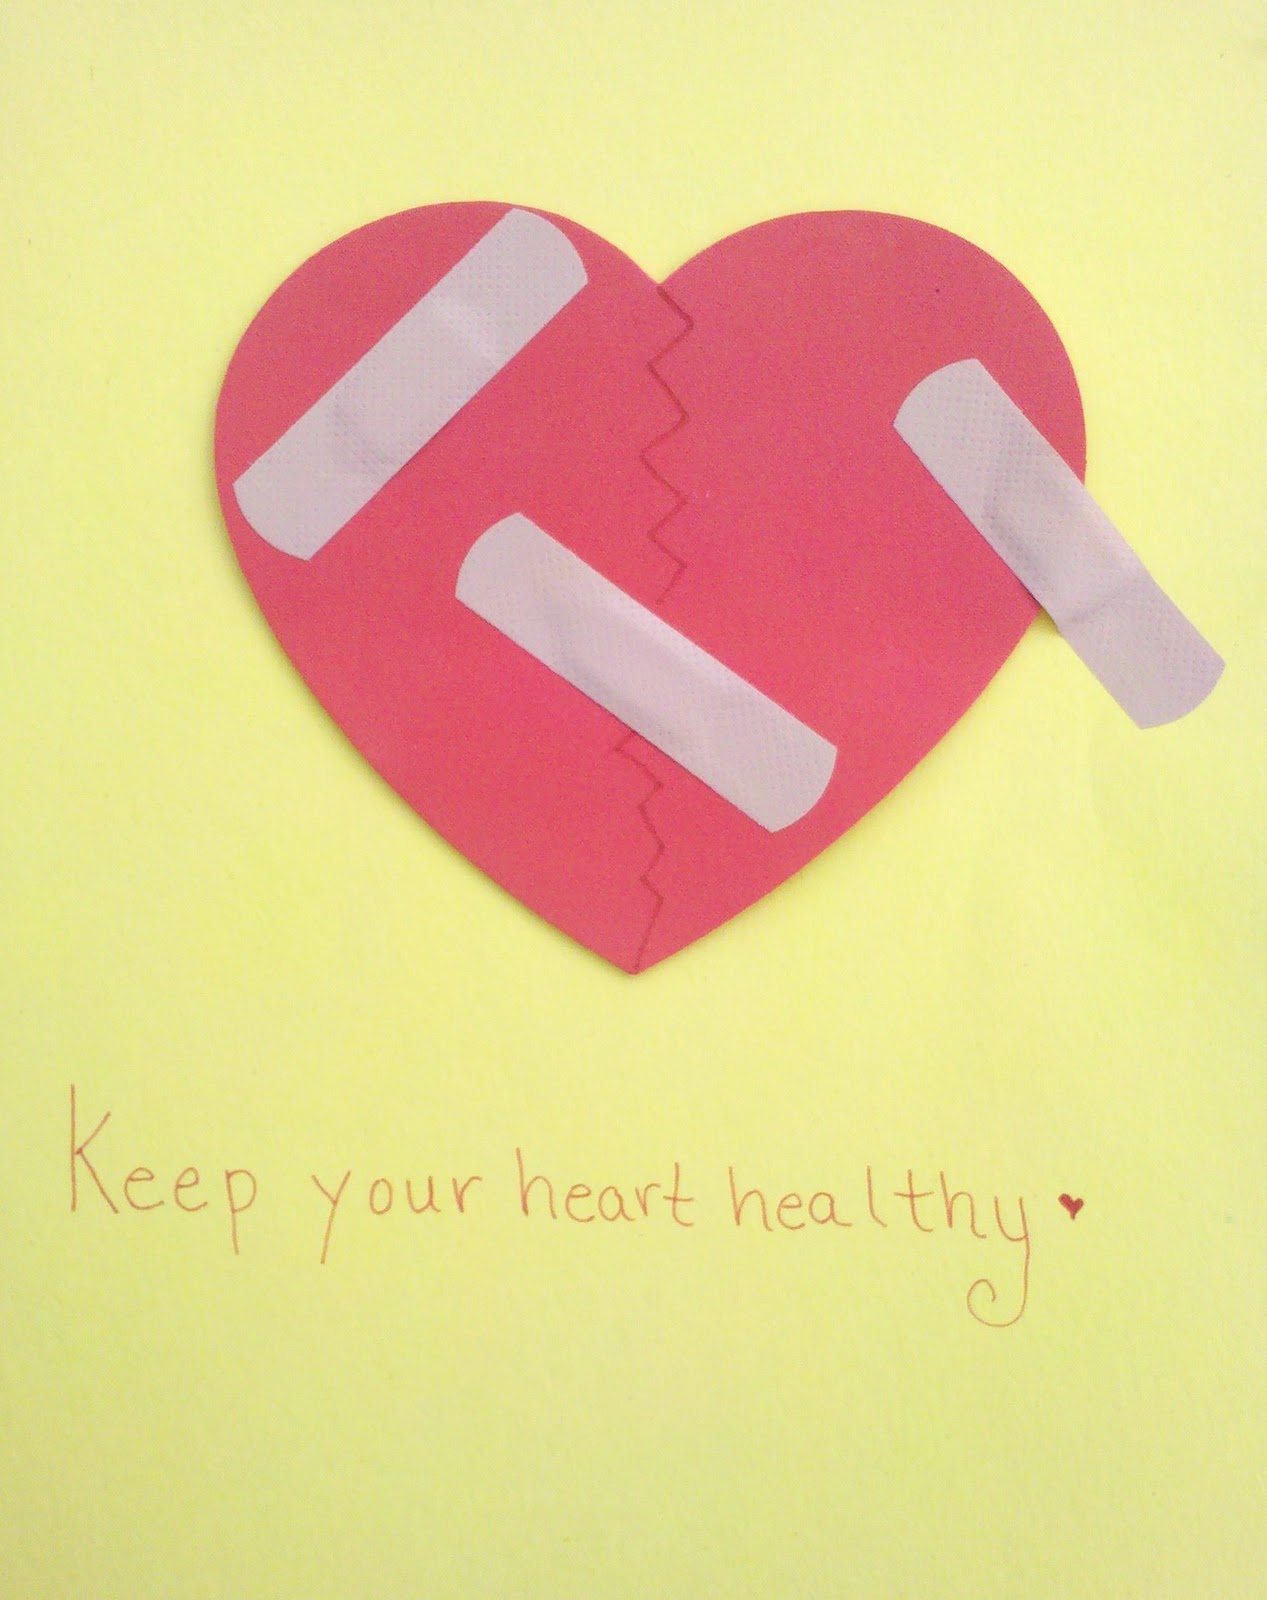 making heart healthy